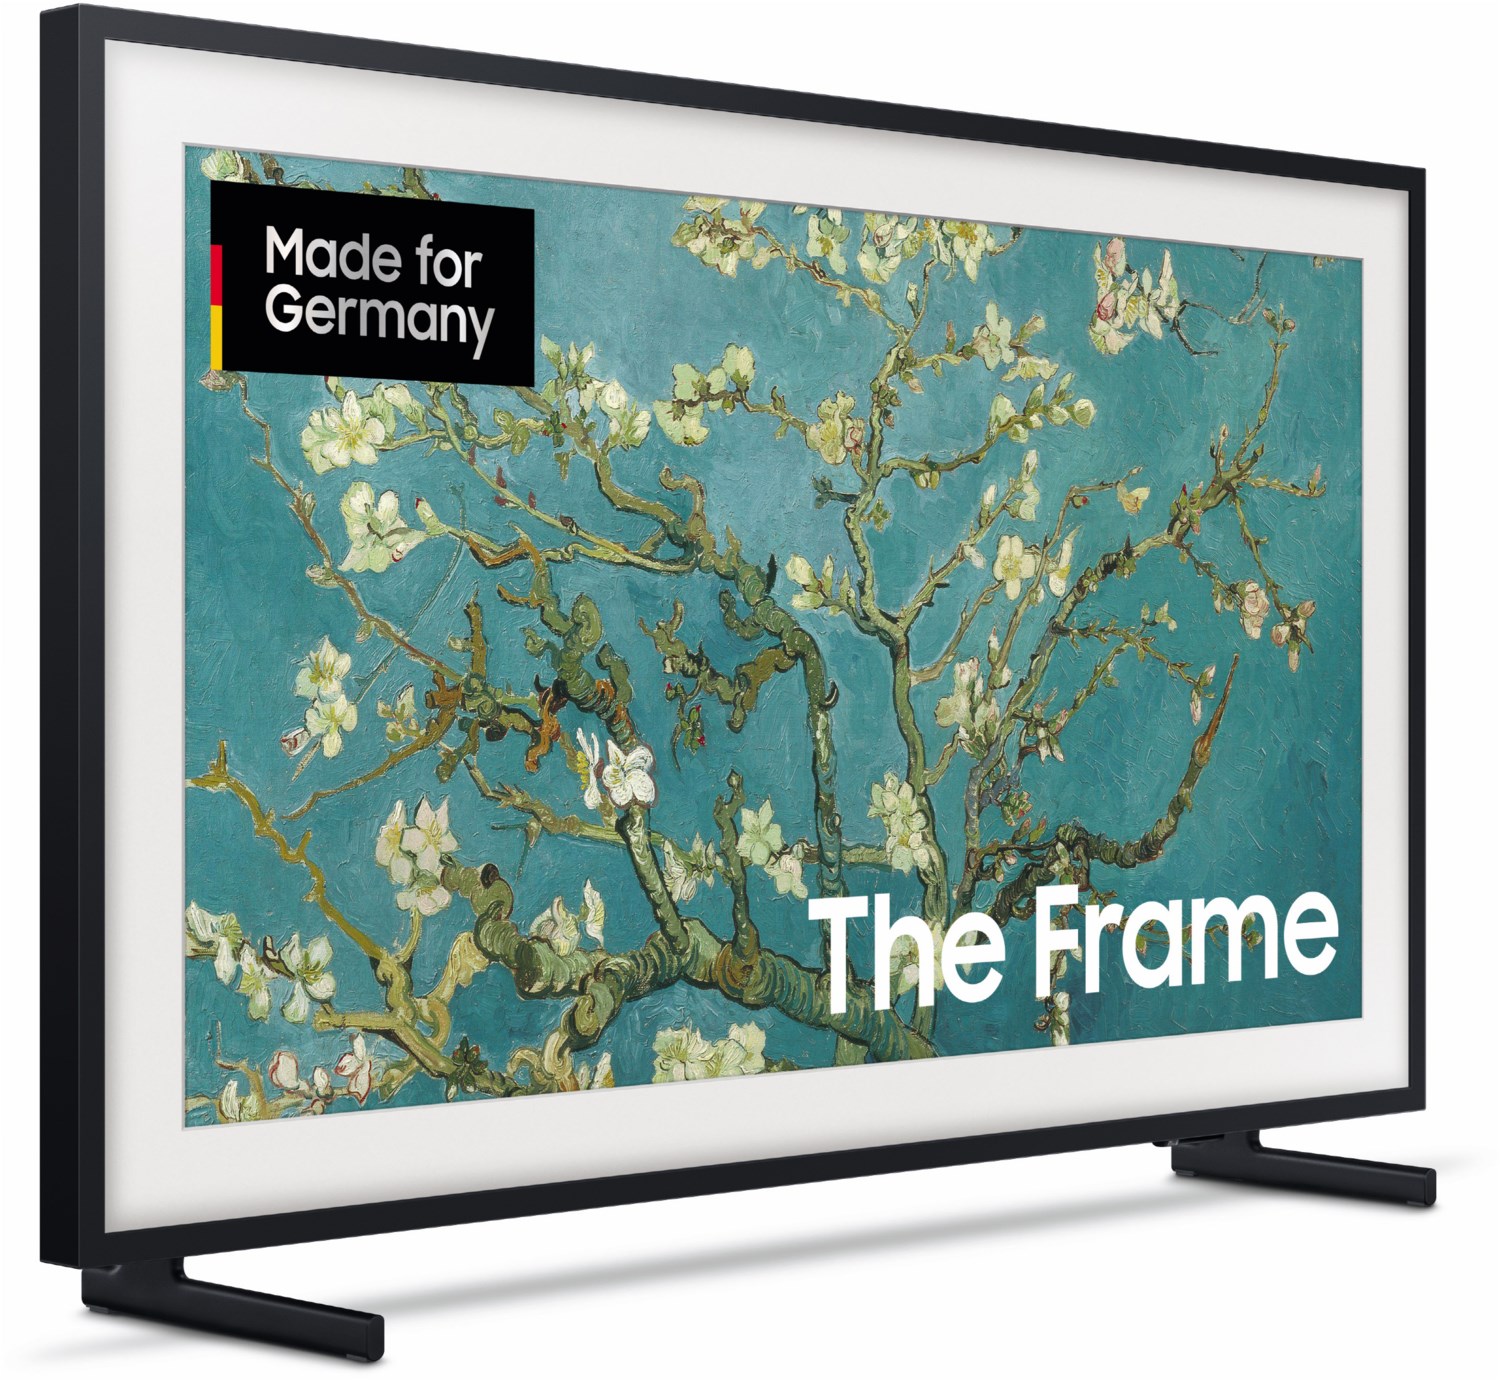 Samsung QLED-TV The Frame 32 Zoll (81 cm) FHD schwarz